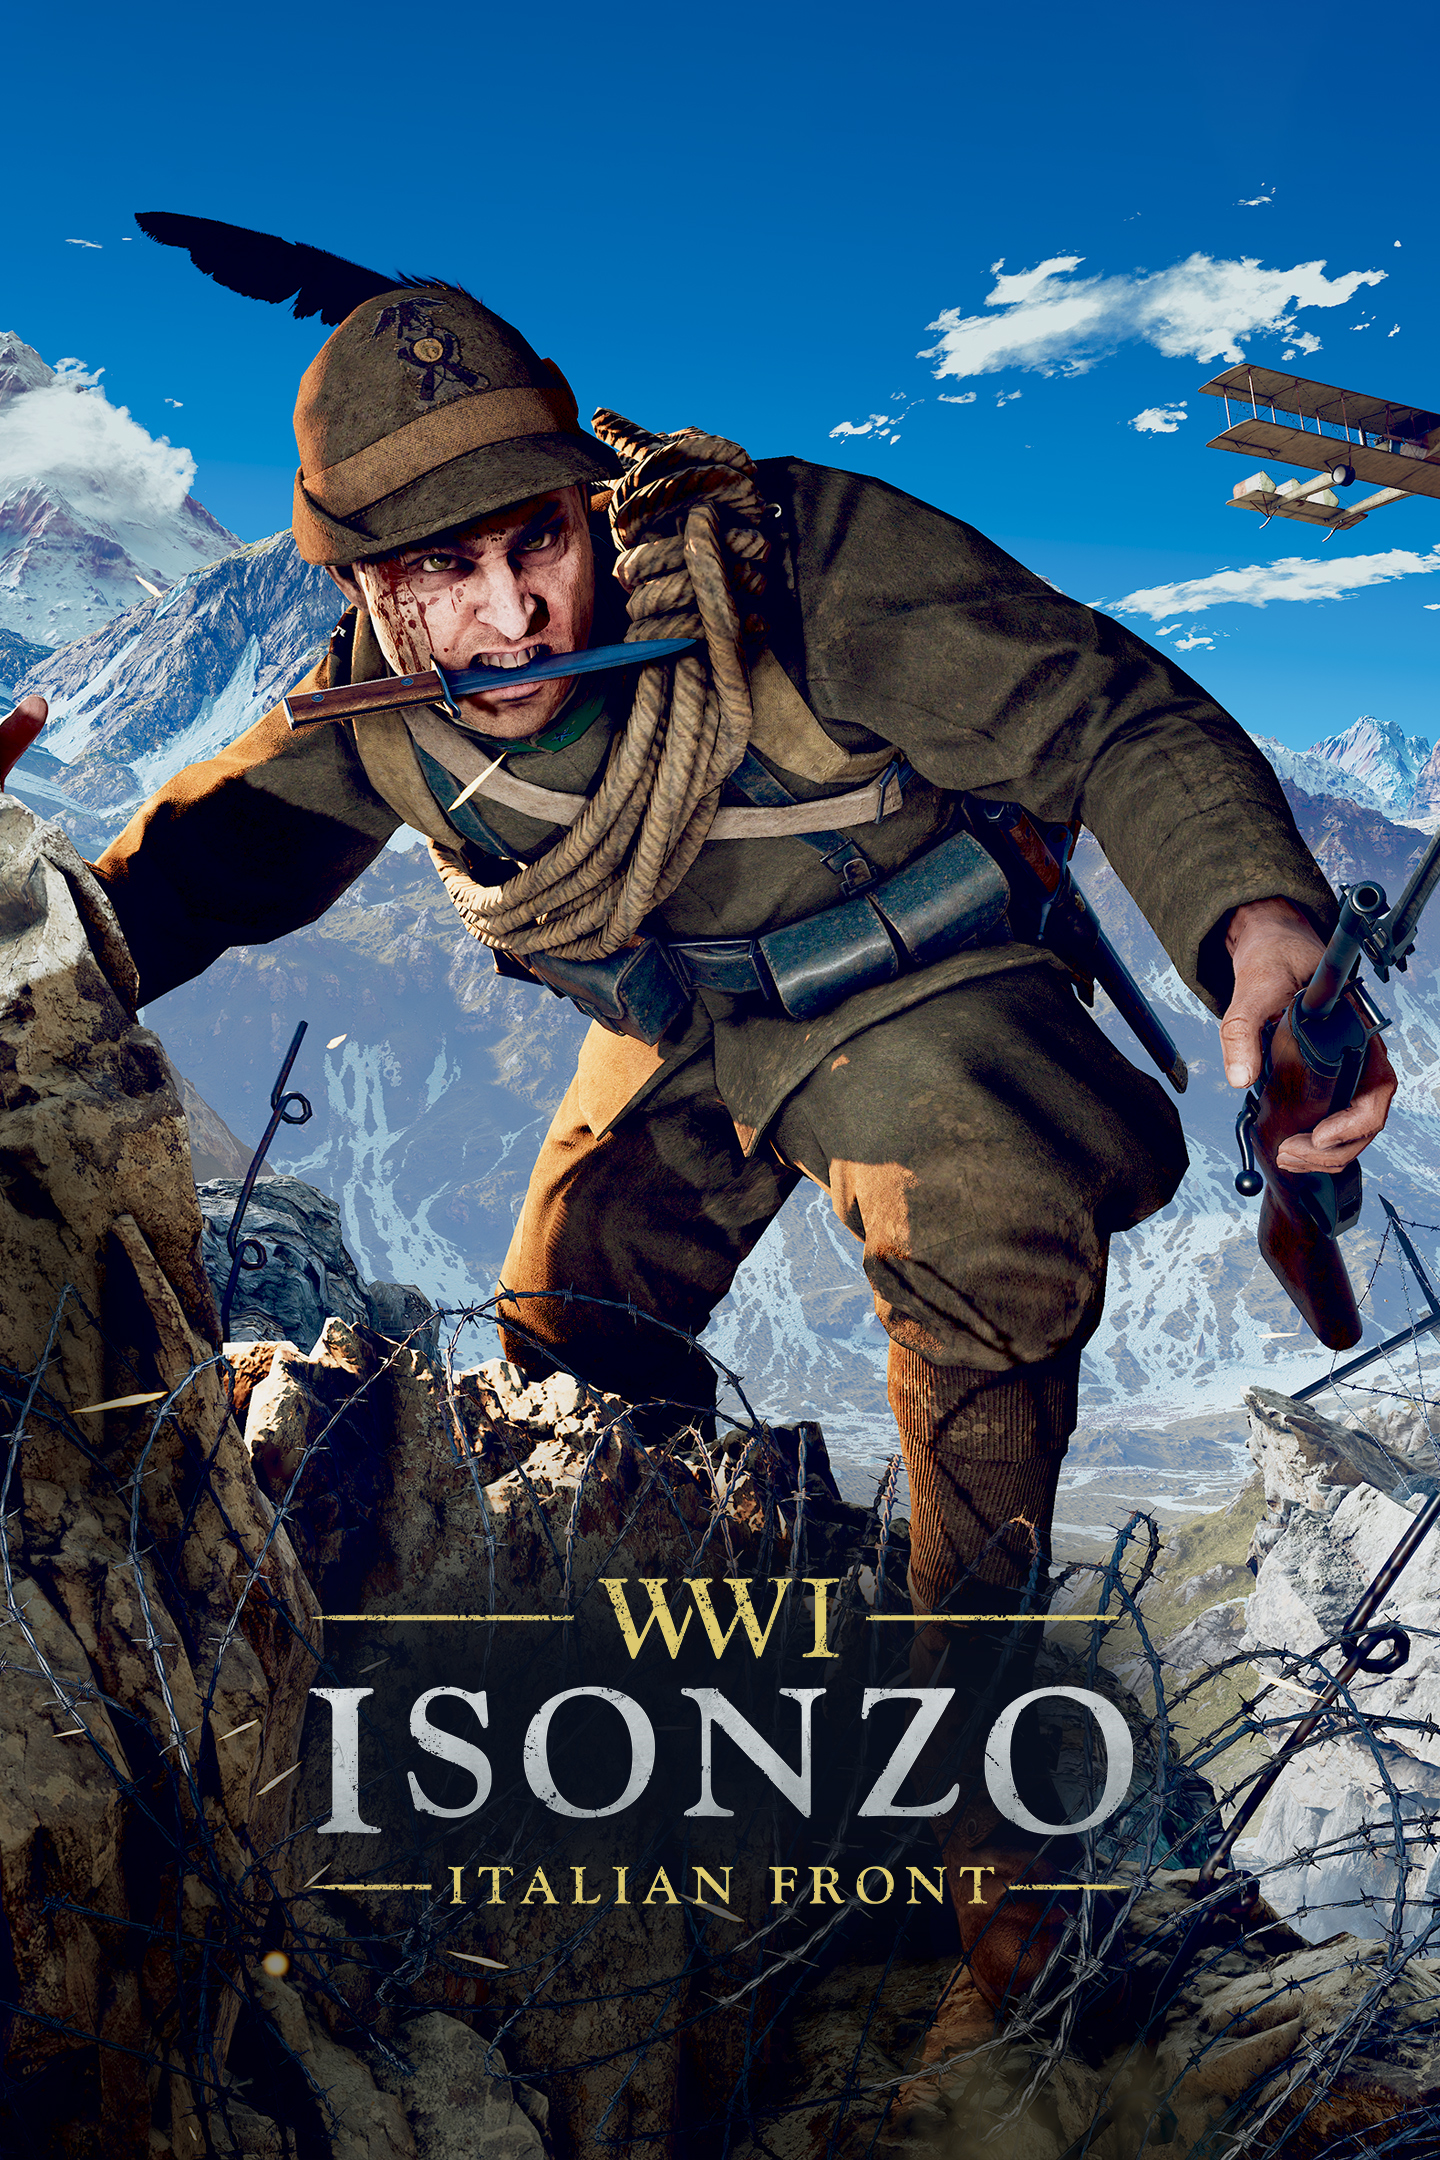 isonzo download